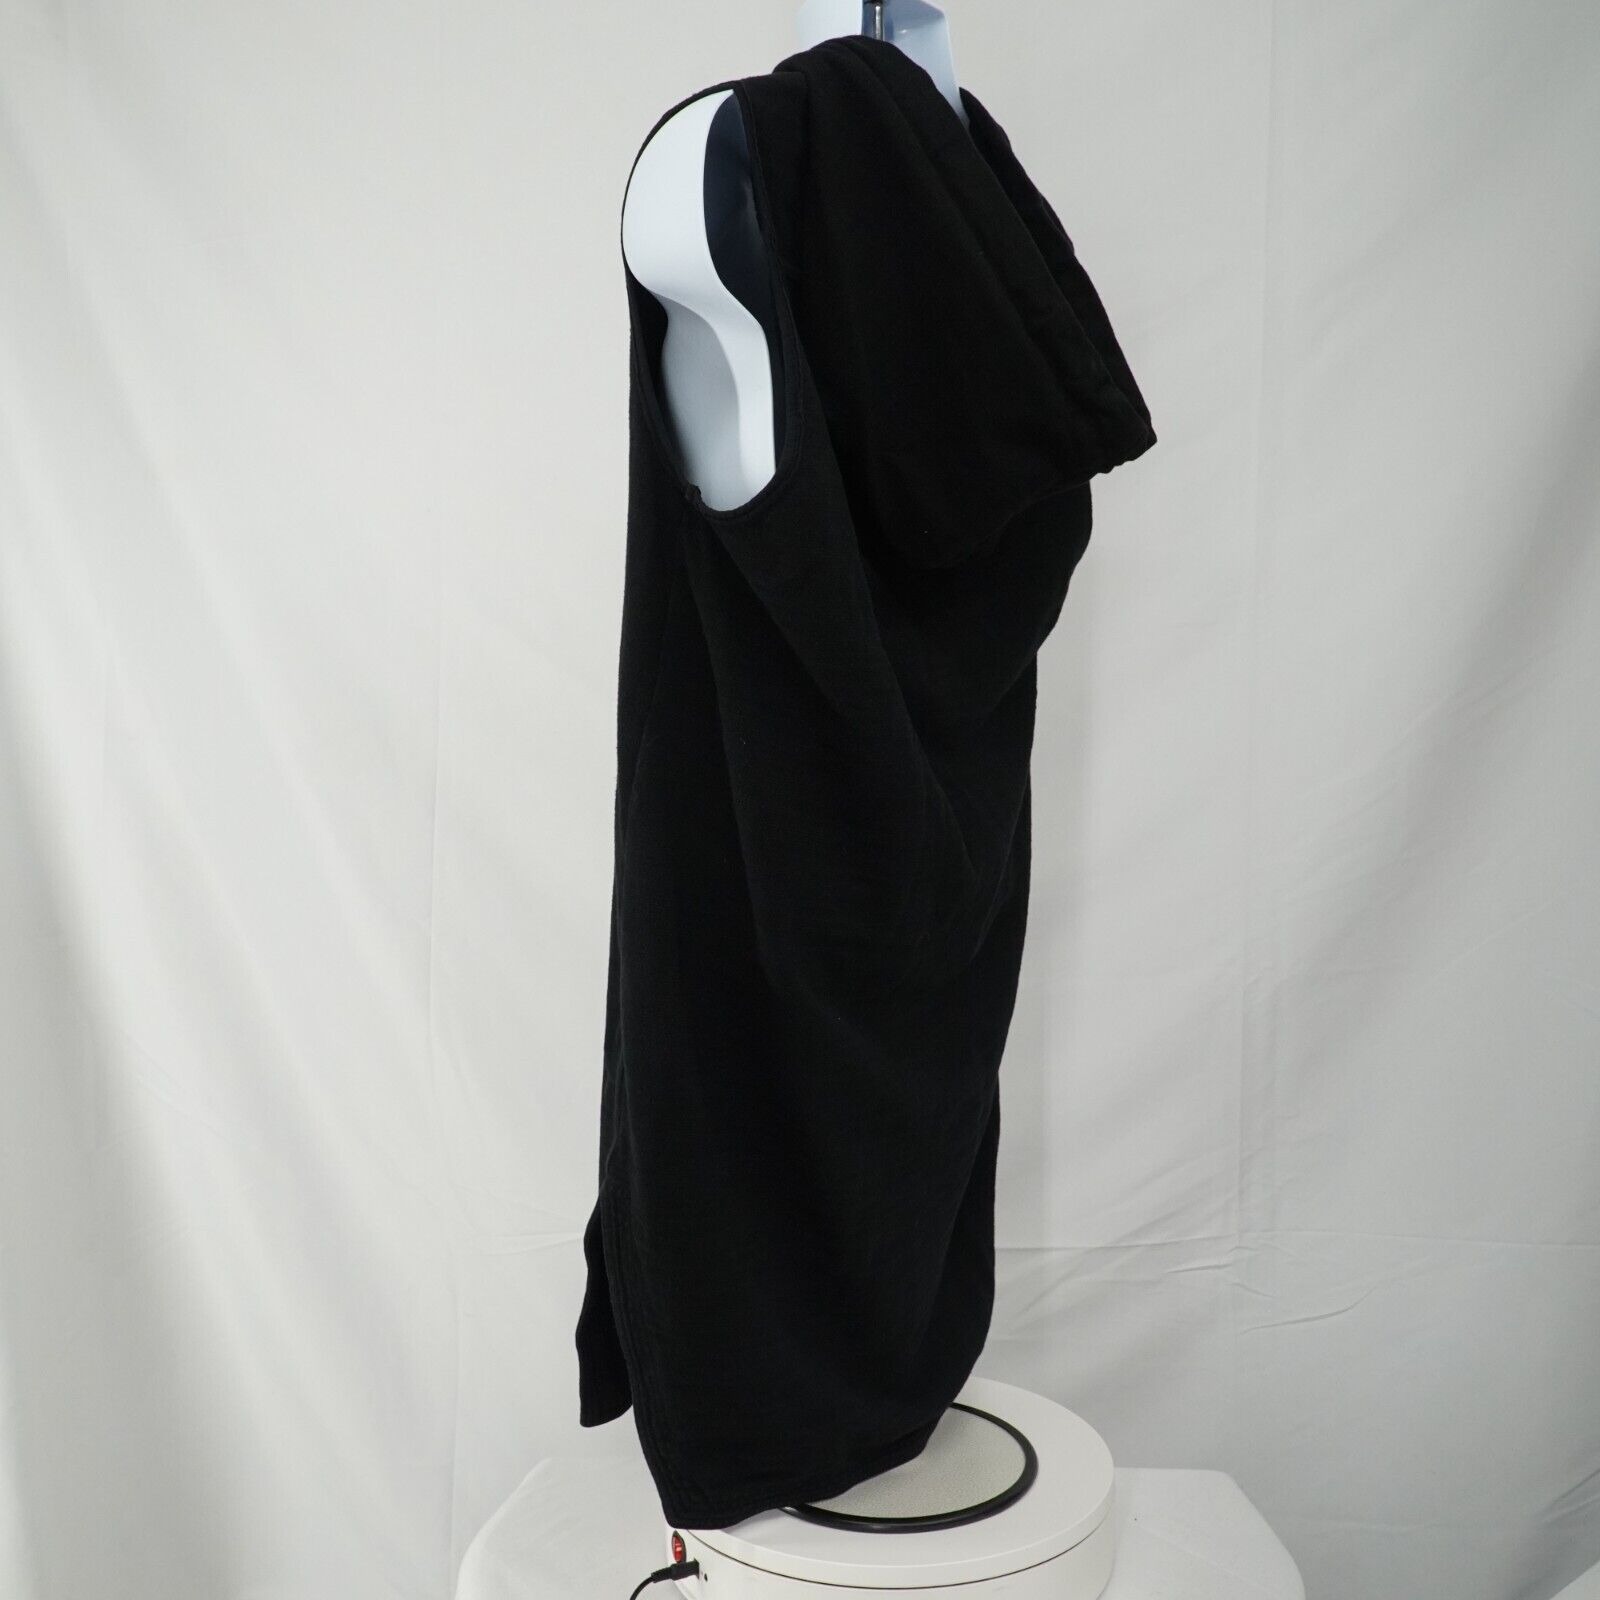 Black Zip Up Sleeveless Jacket Hoodie Cotton - Medium - 12